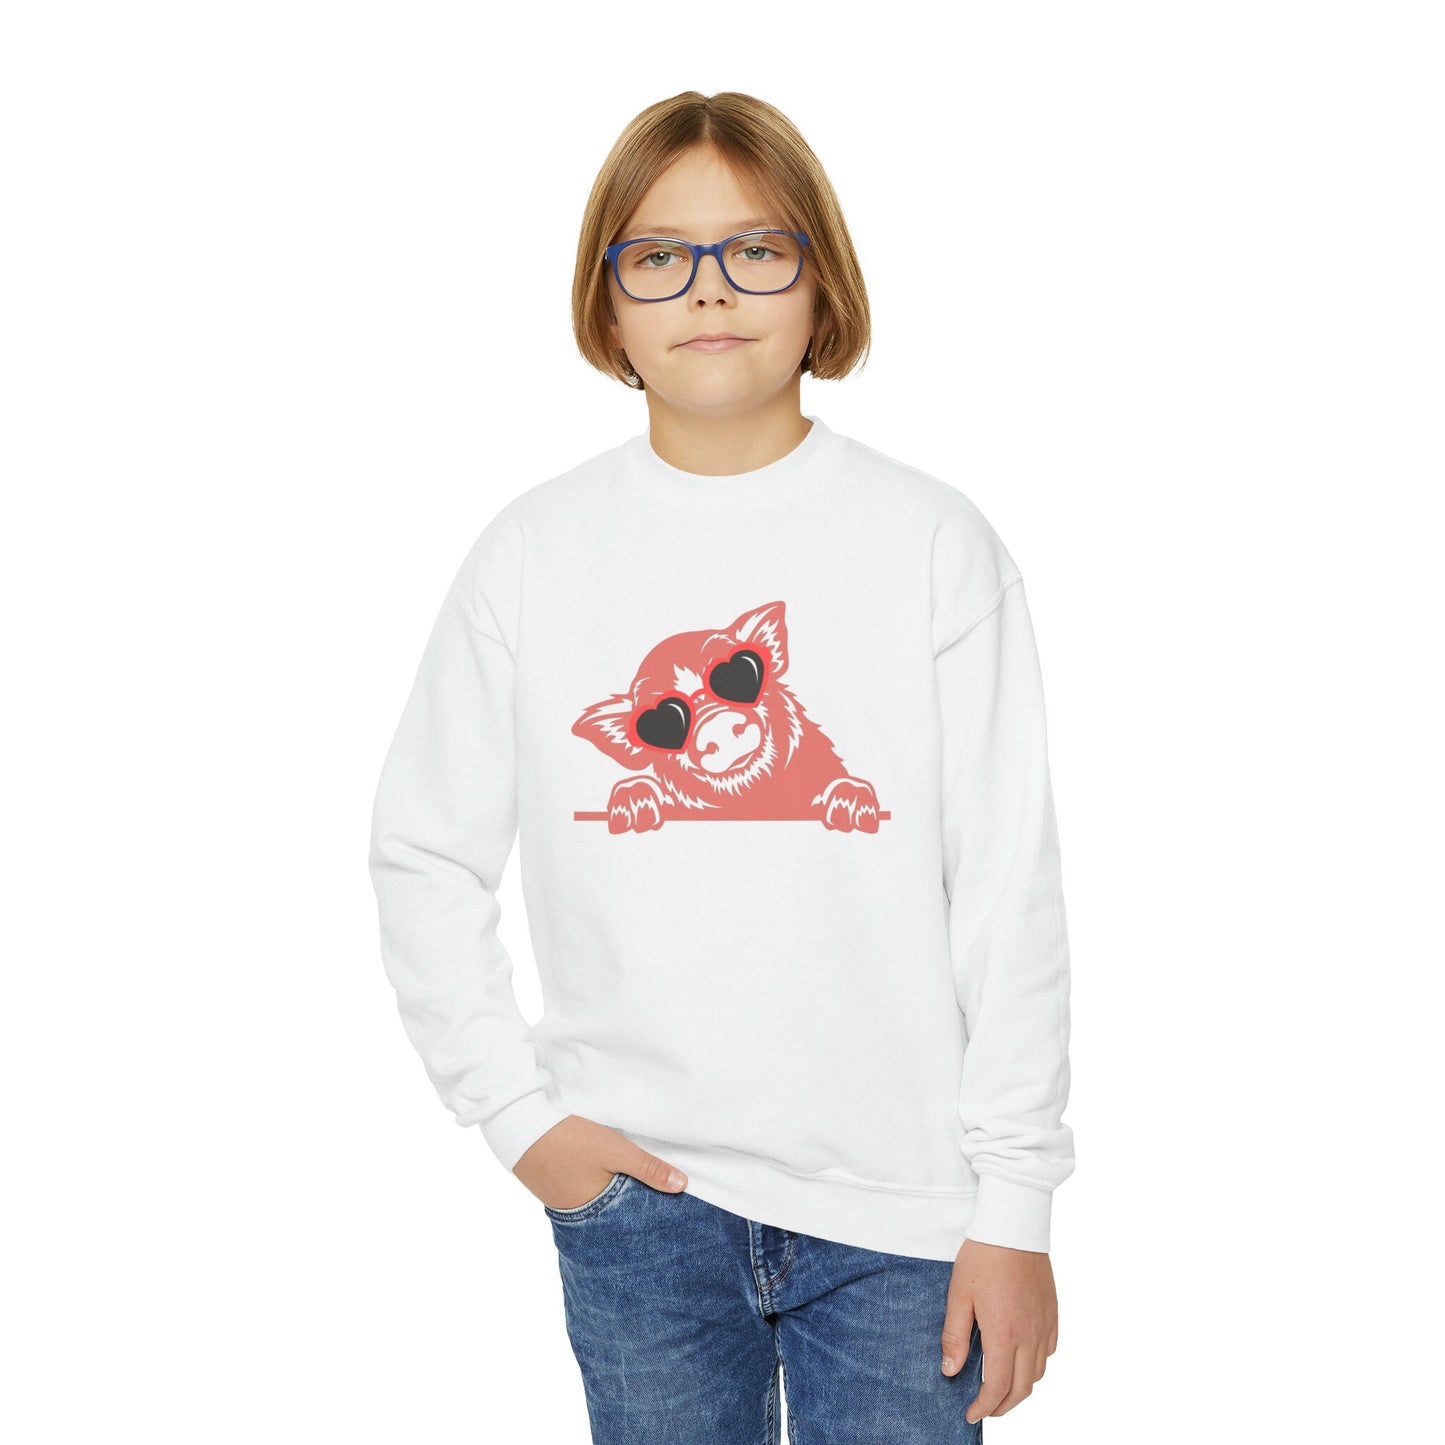 Heart Glasses Pig Youth Sweatshirt, Cute Pig Sweatshirt, 90s Mom Shirts For Women, Pig Lover Gifts, Simple Pig Hoodies For Wom